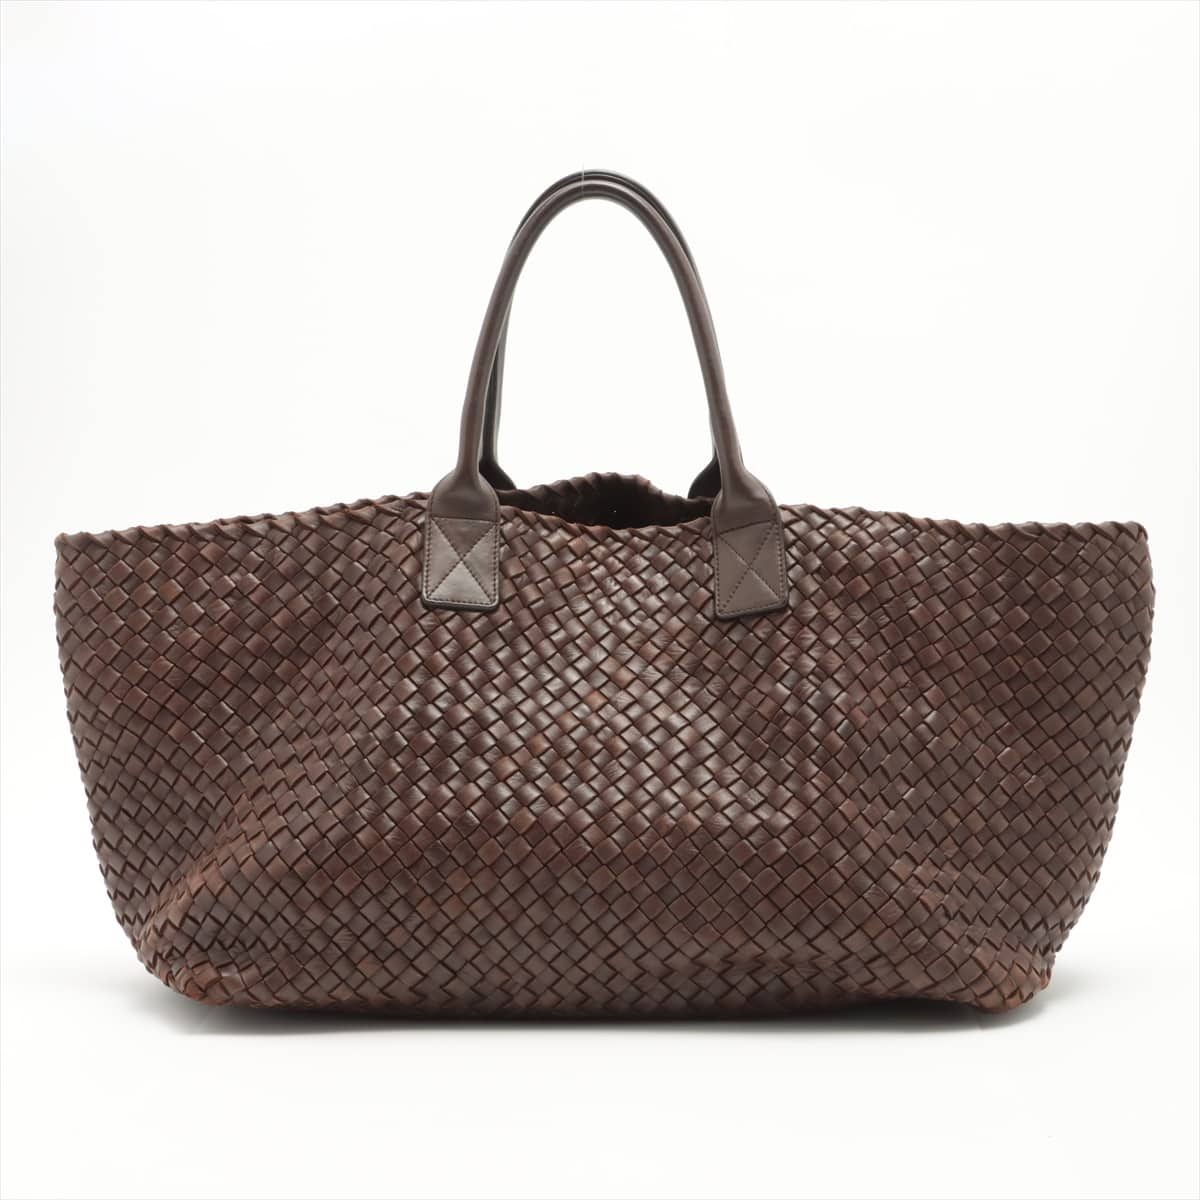 Bottega Veneta Intrecciato Cabas GM Leather Tote bag Brown with pouch